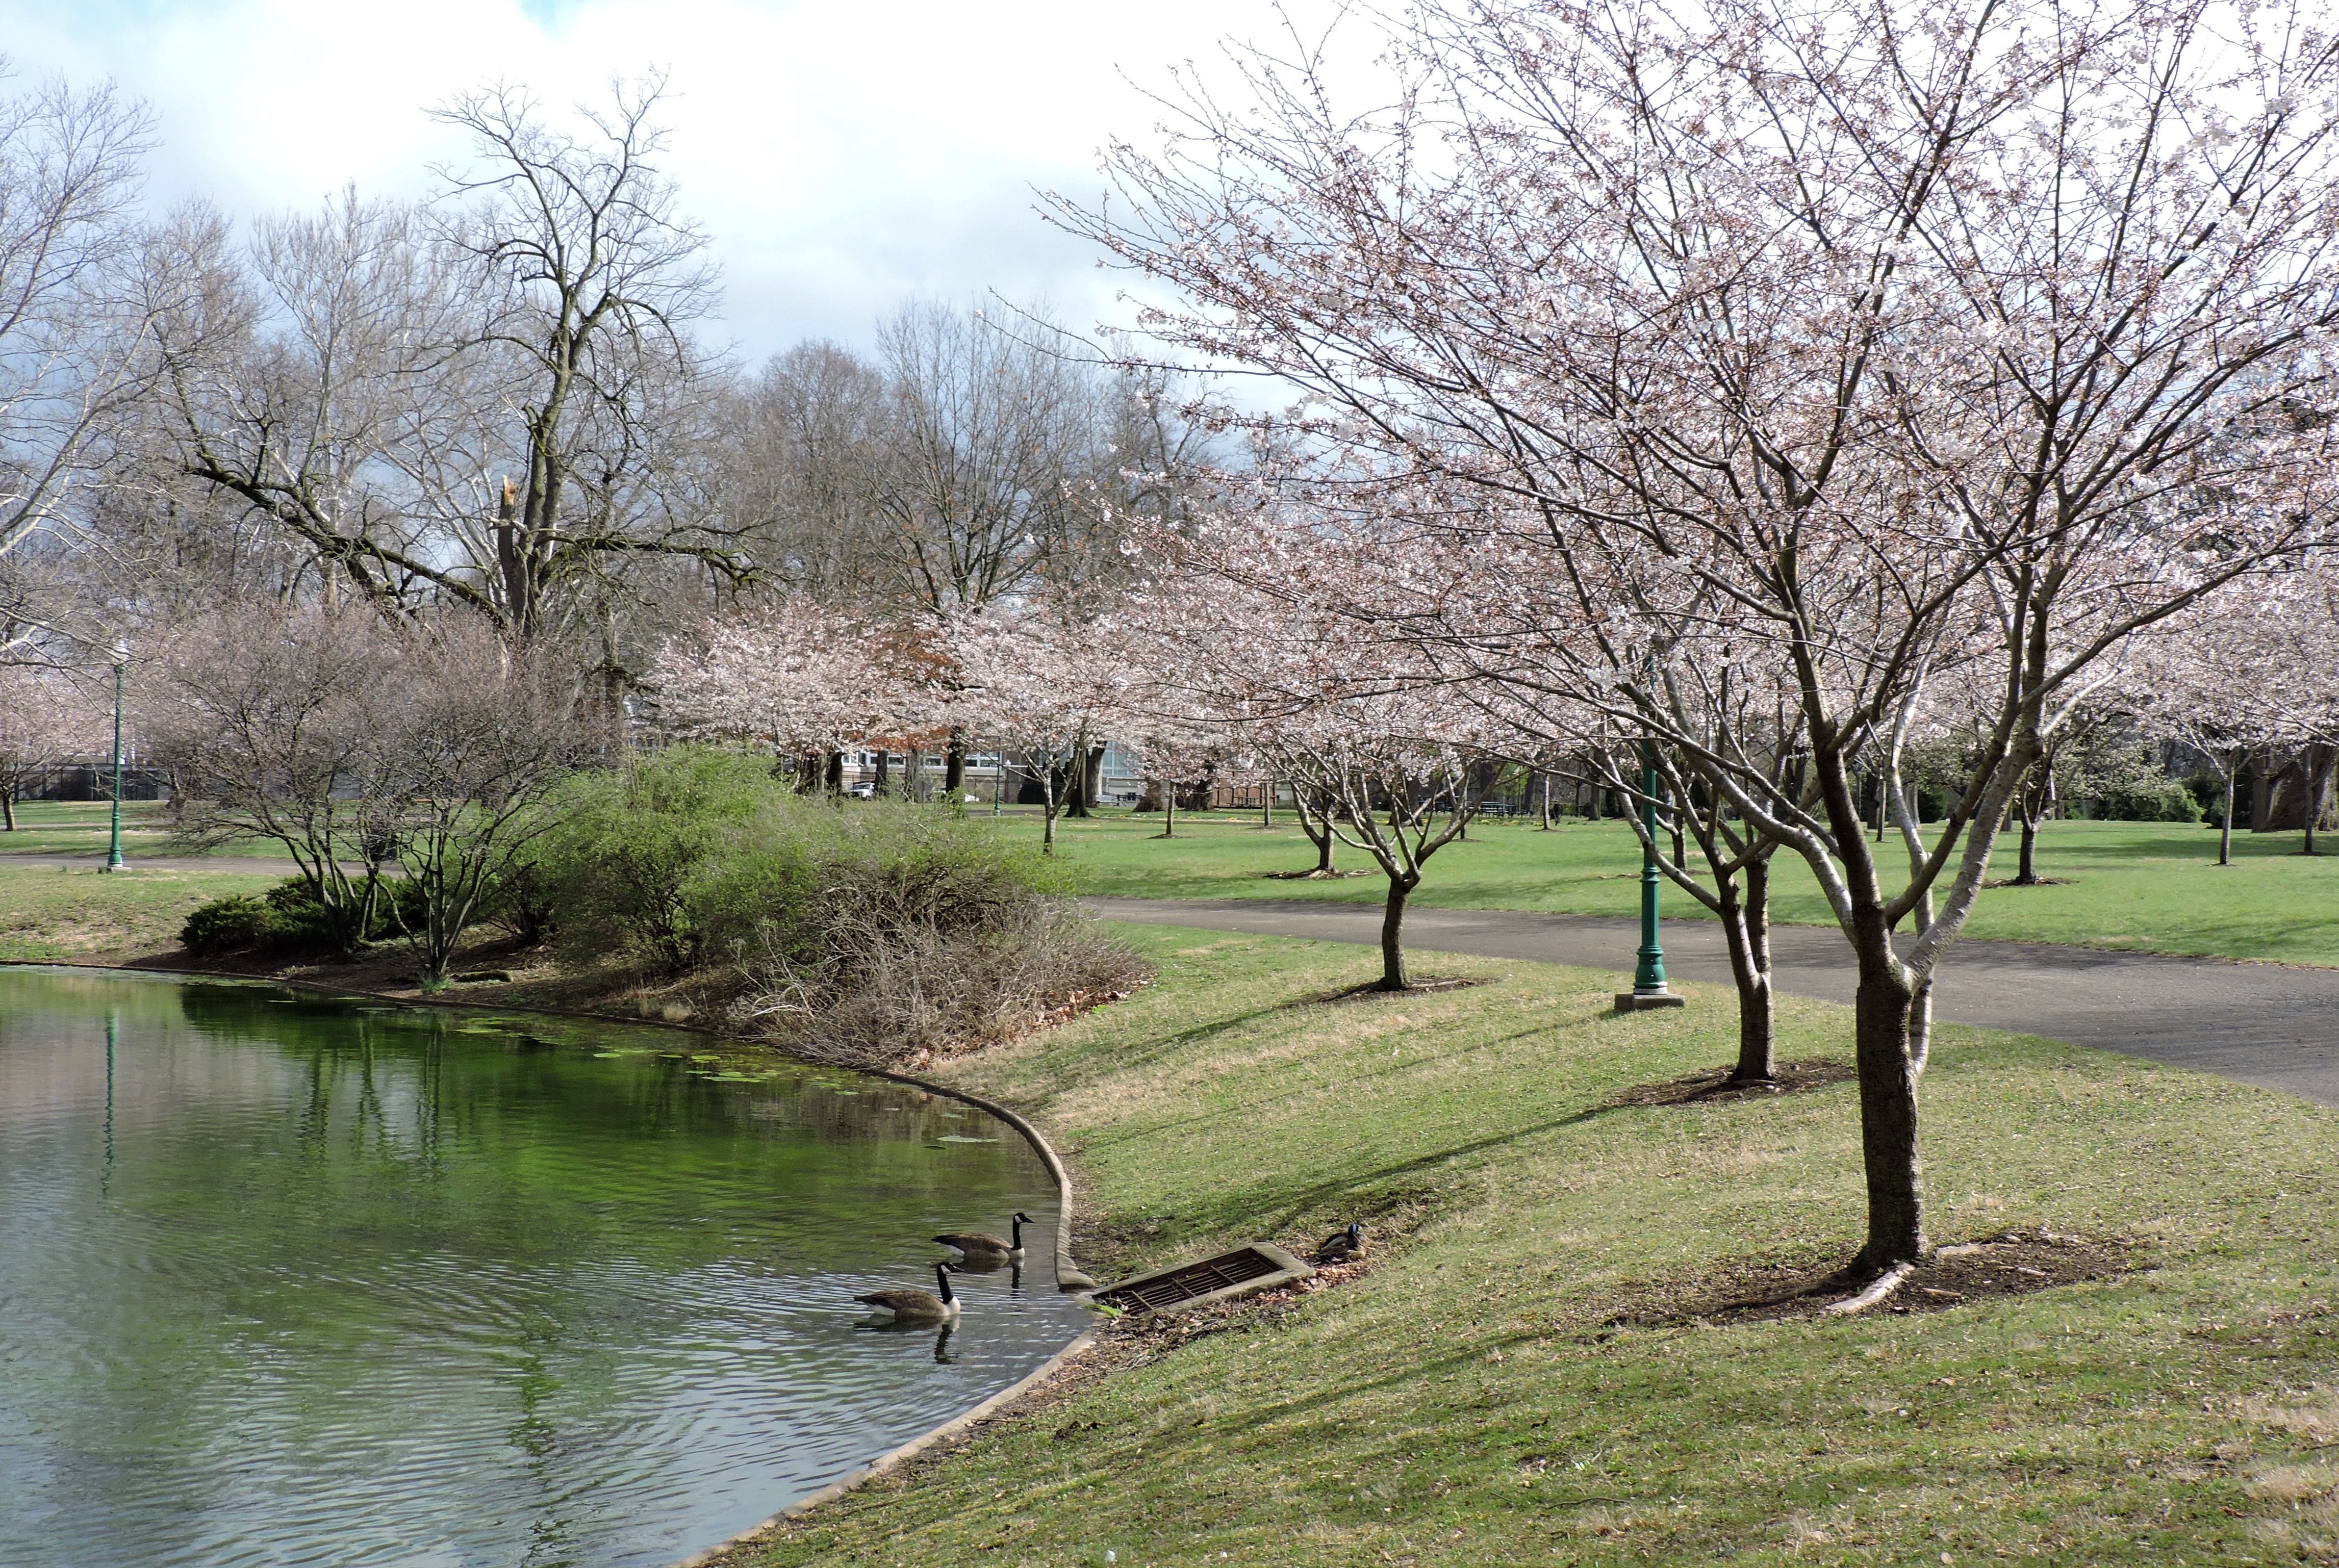 A row of cherry trees borders a lake